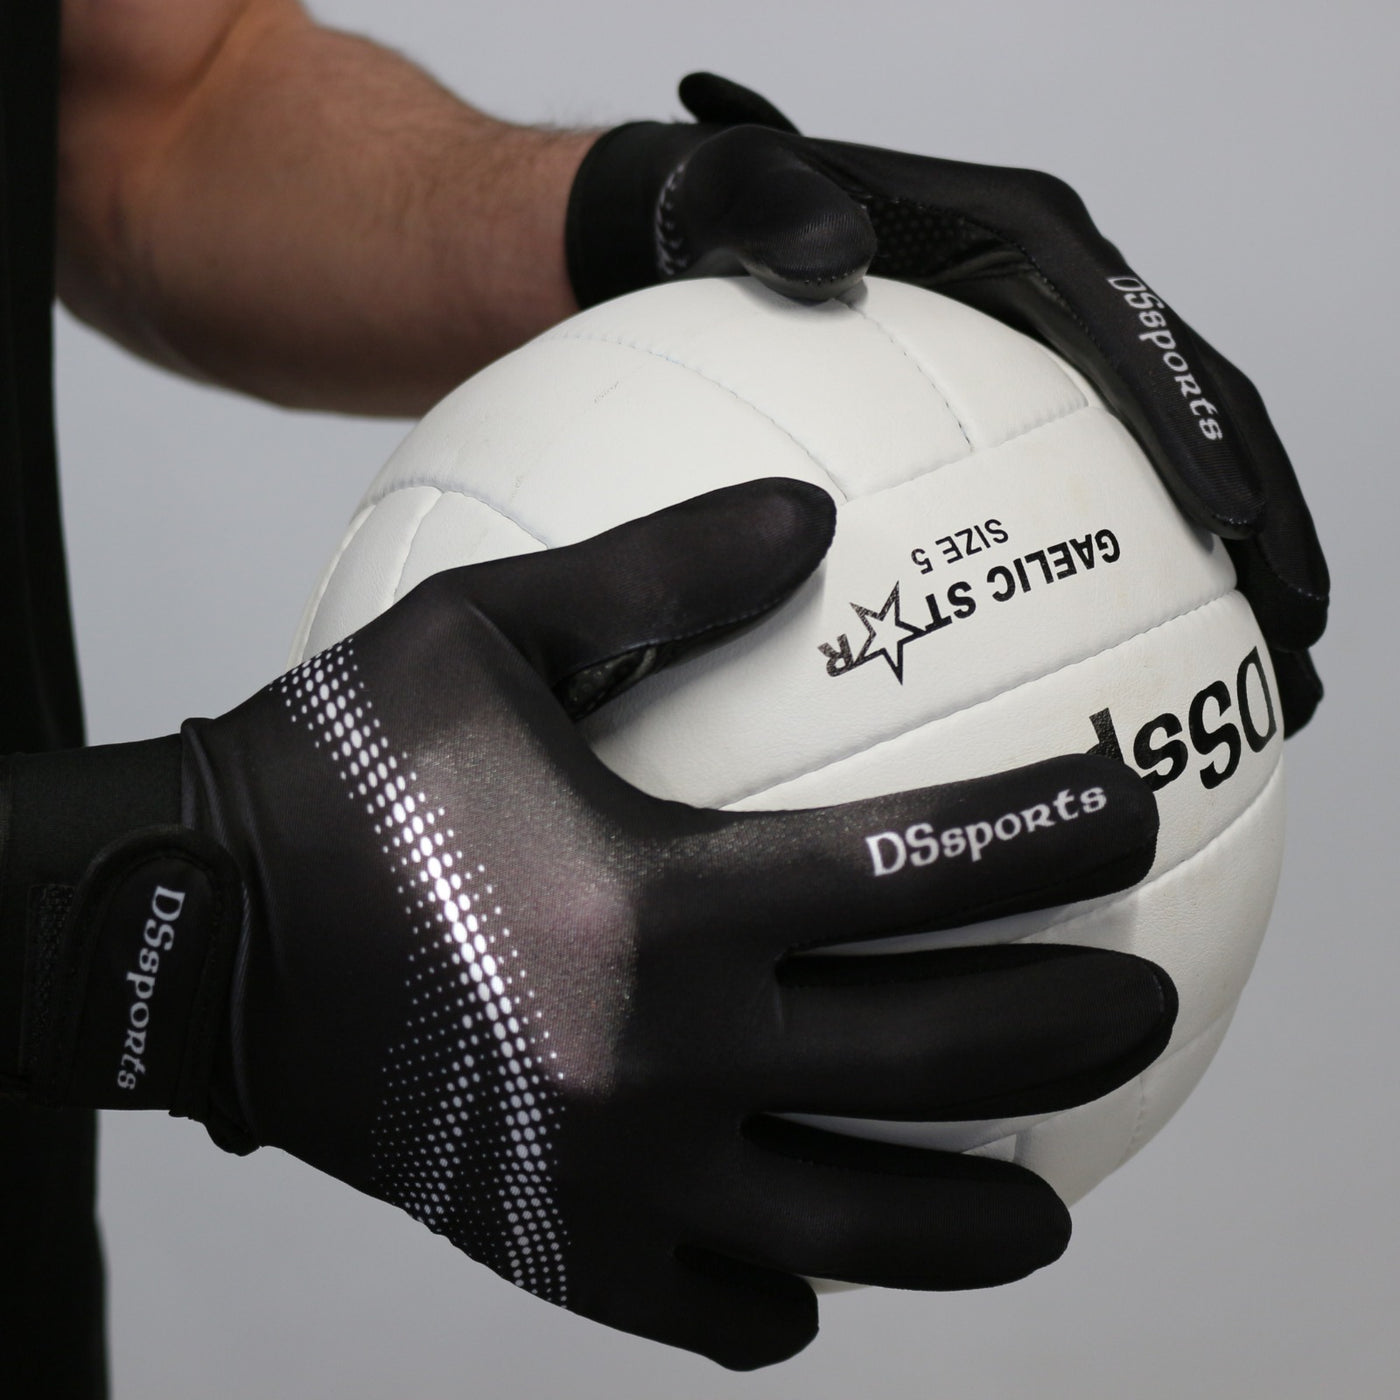 Black/White Gaelic Gloves